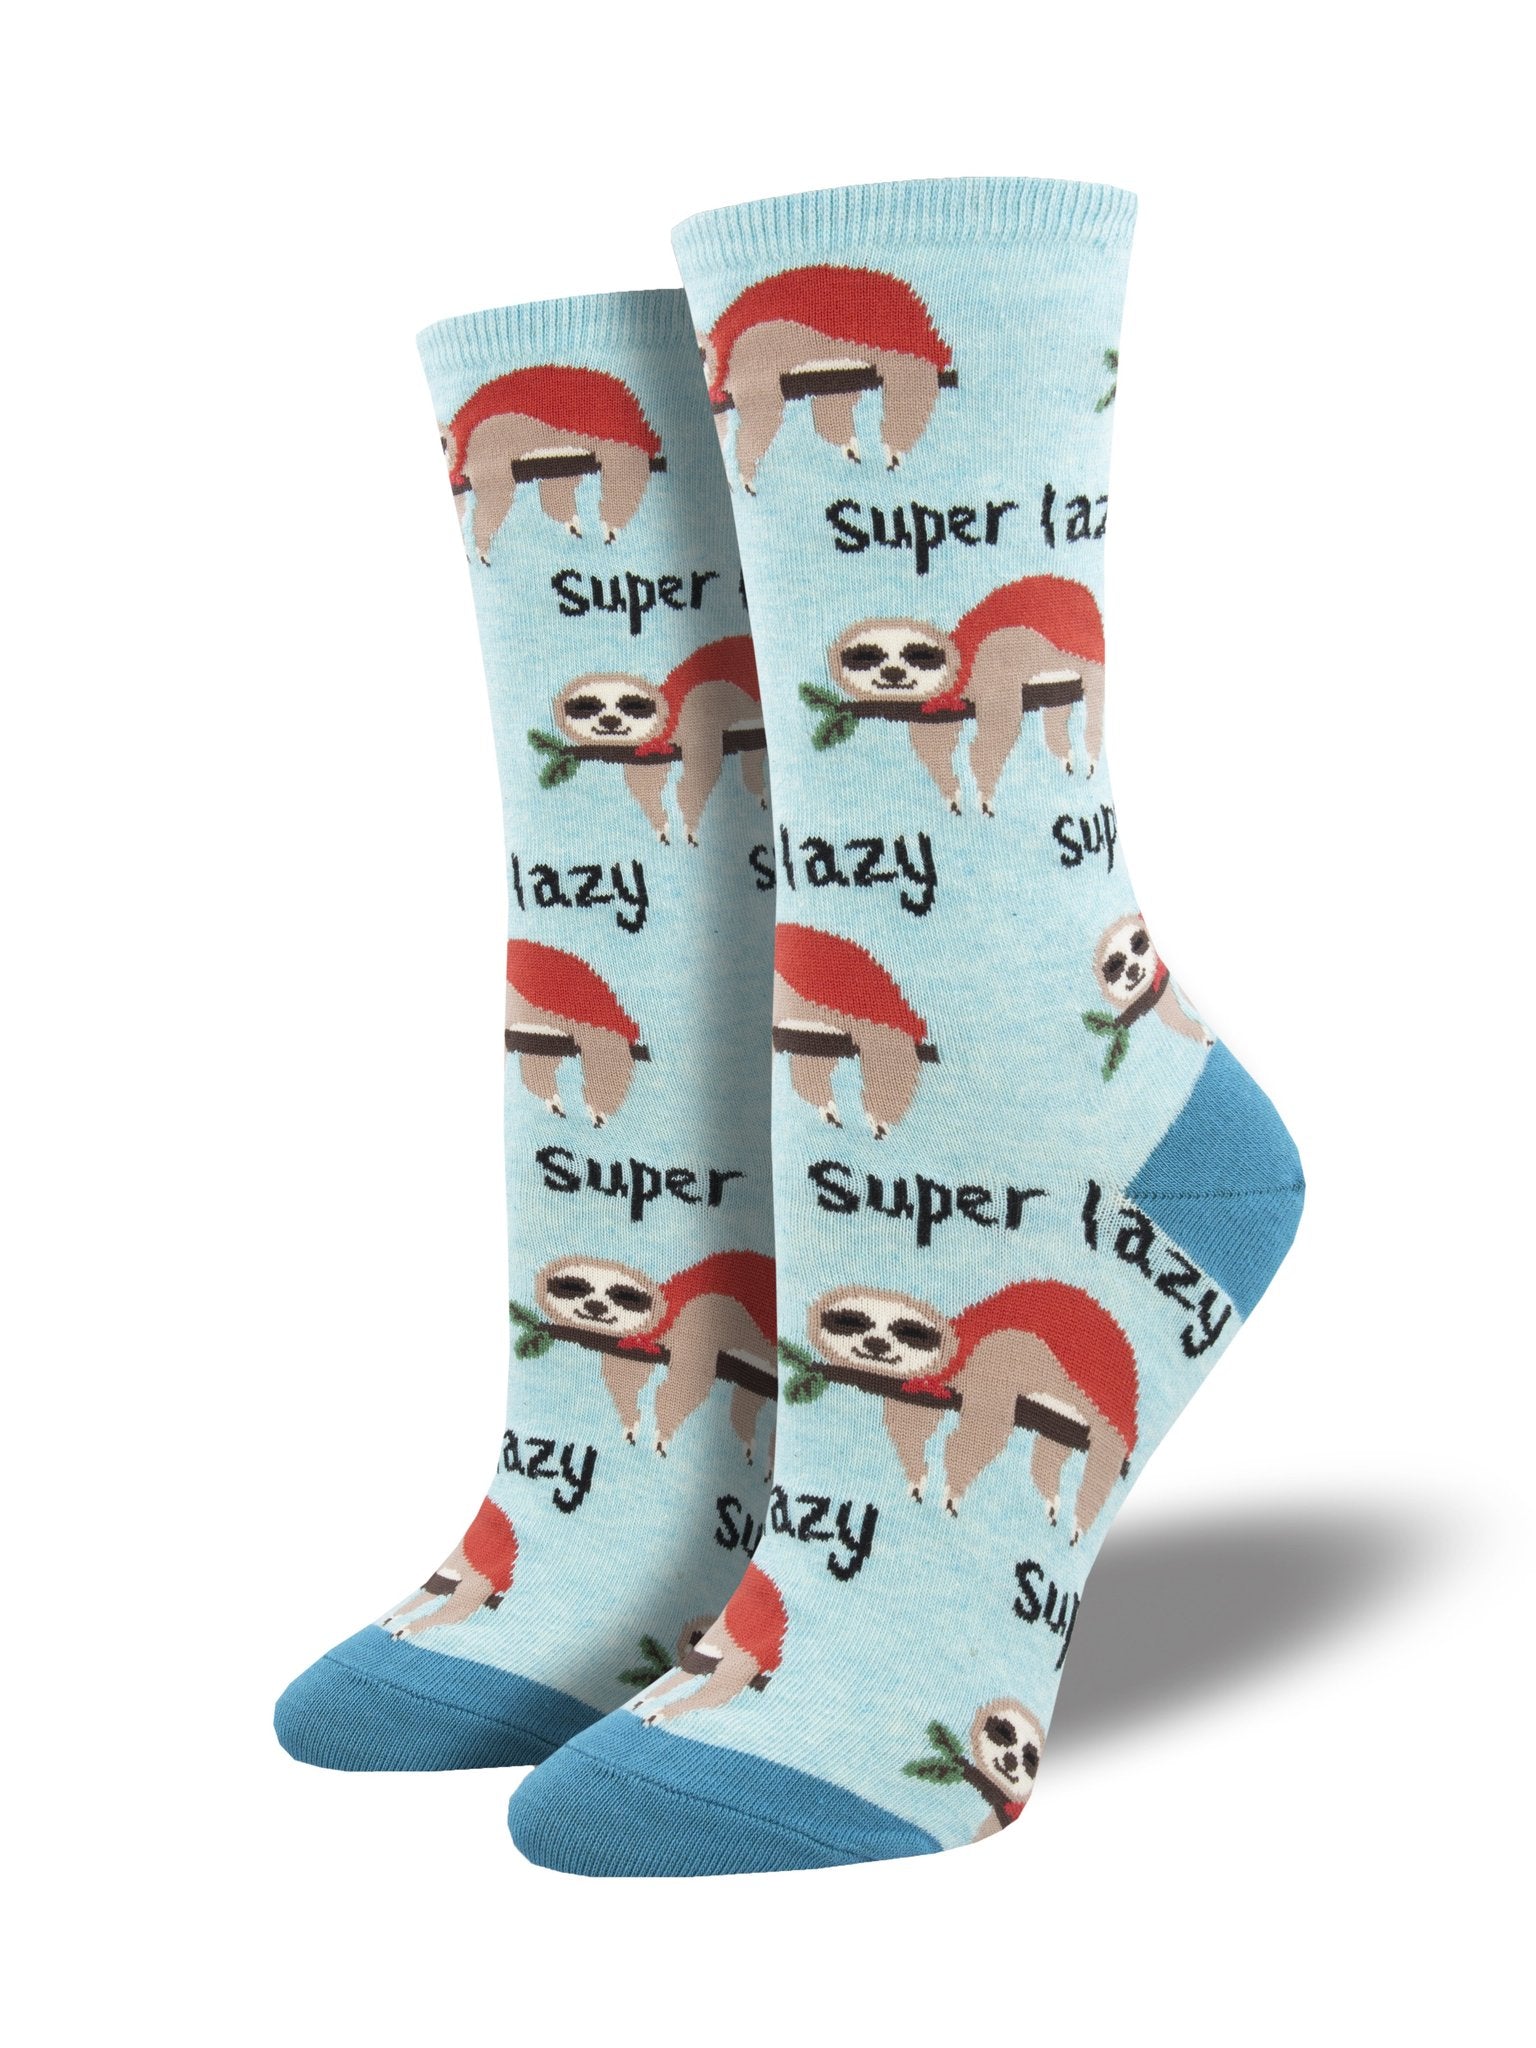 Super Lazy Women's Crew Socks